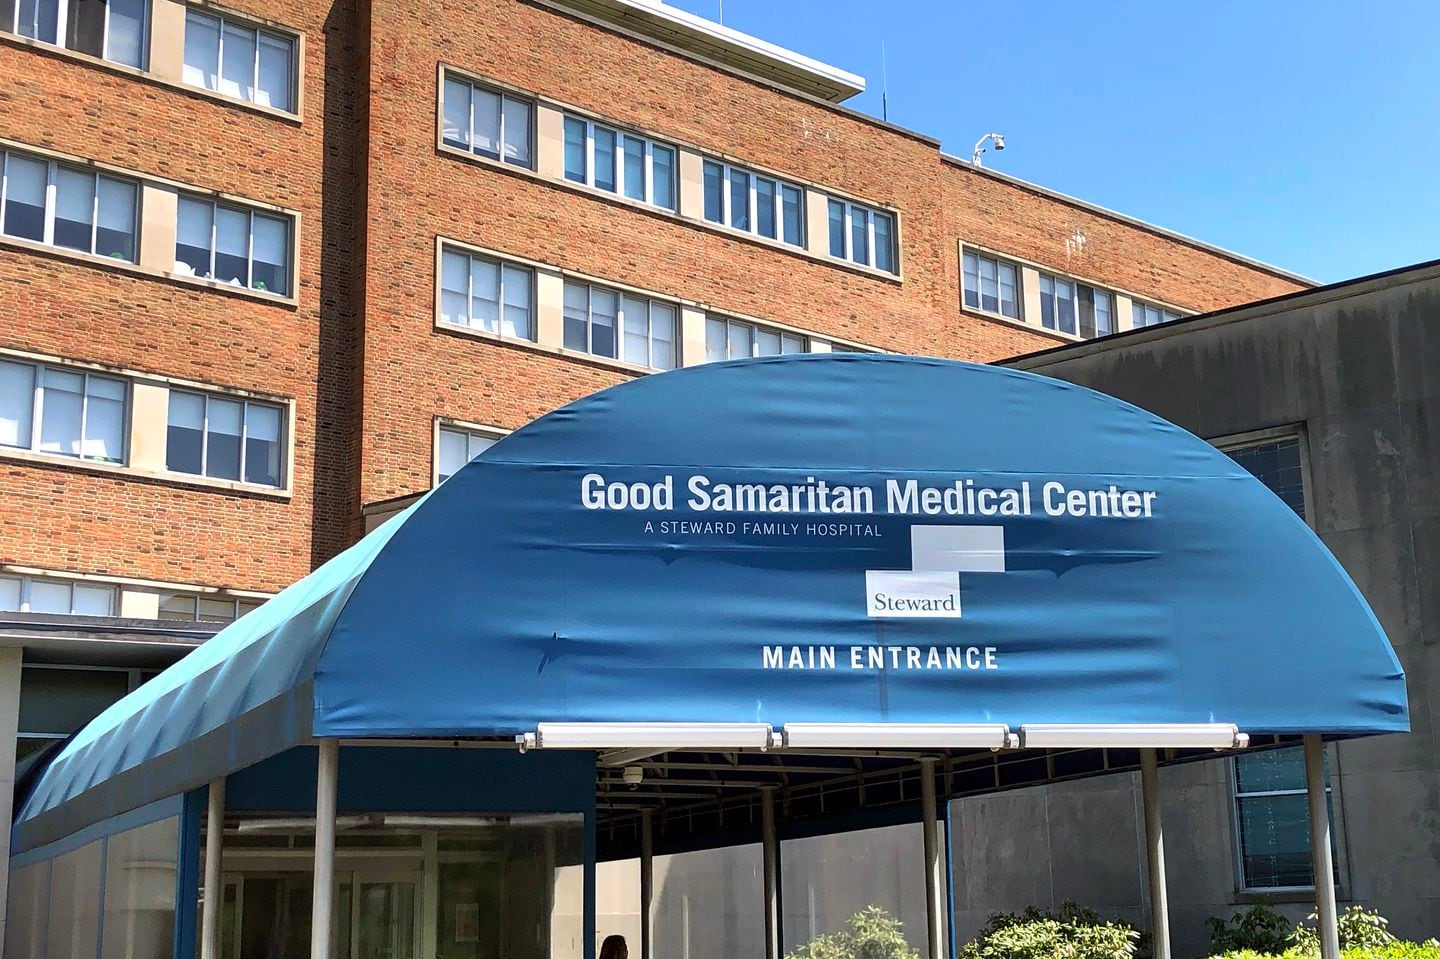 Good Samaritan Hospital is one of Steward's Massachusetts hospitals.